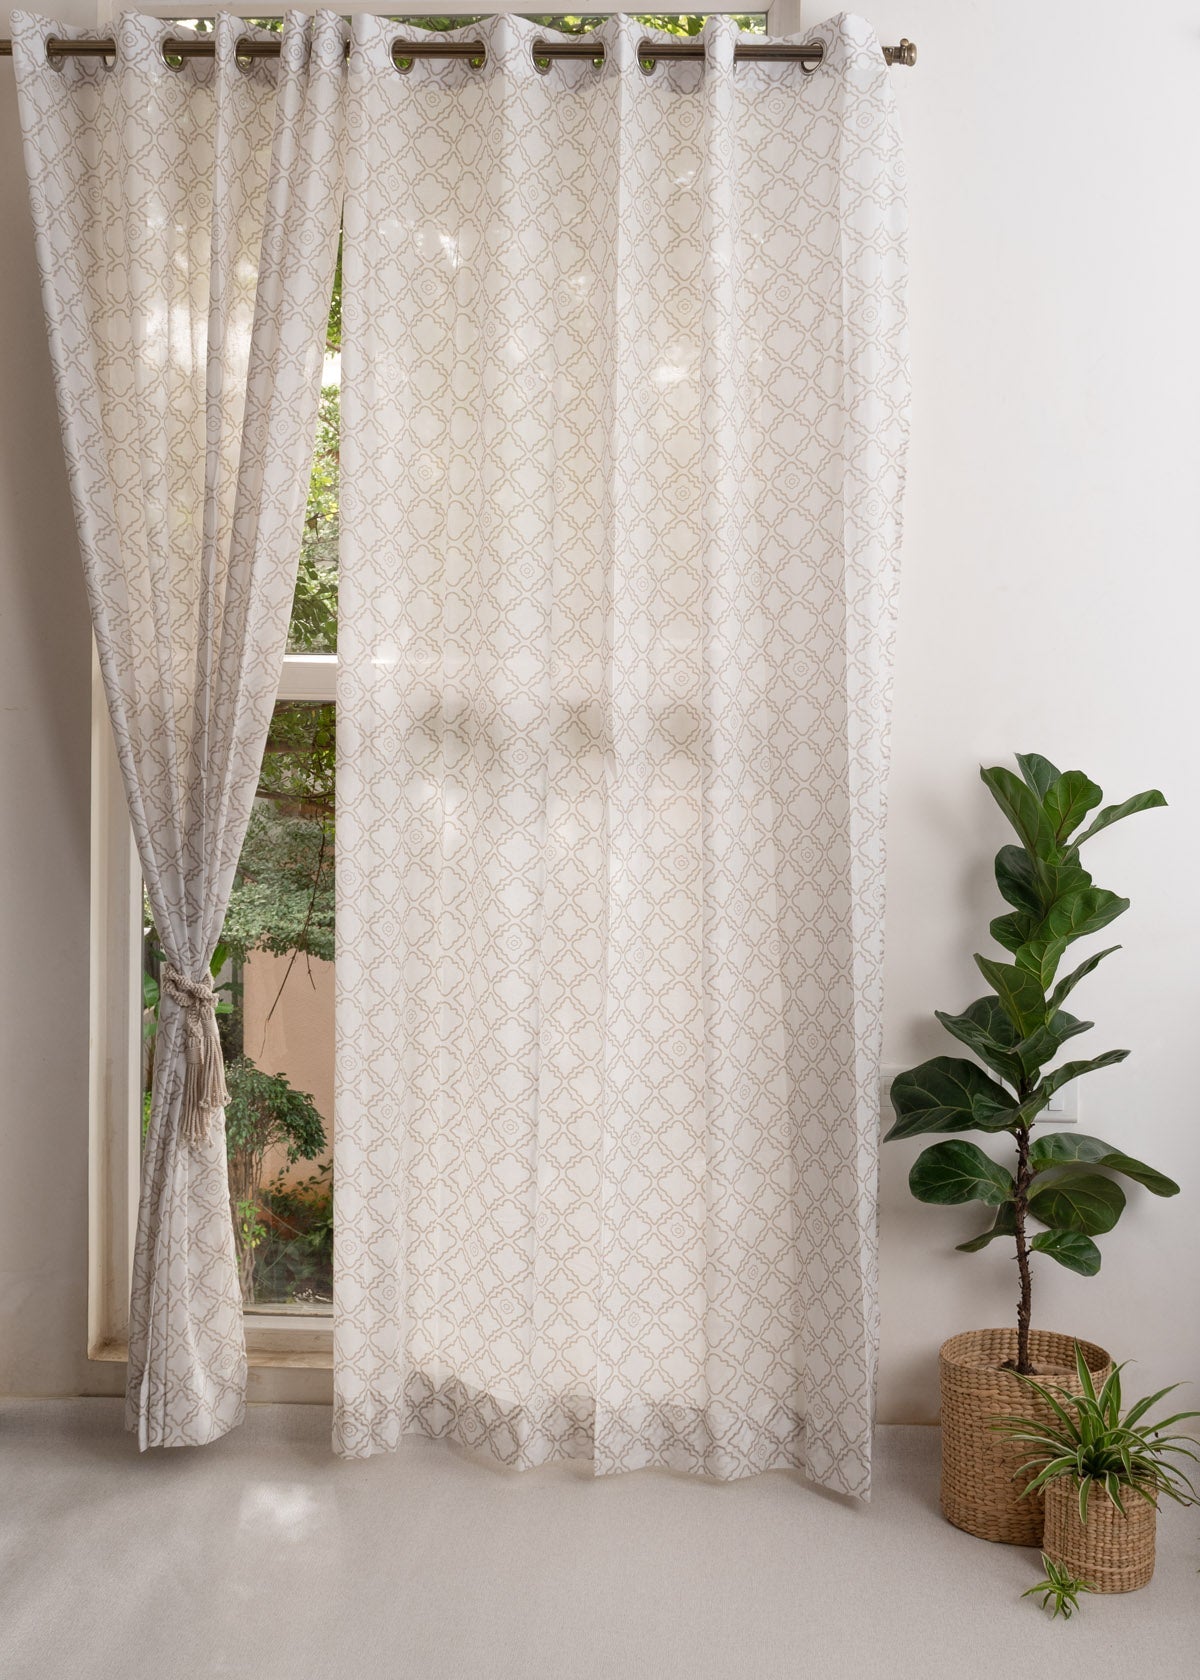 Linen Sheer Curtain Cloth at Rs 185/meter, Sheer Fabric in New Delhi